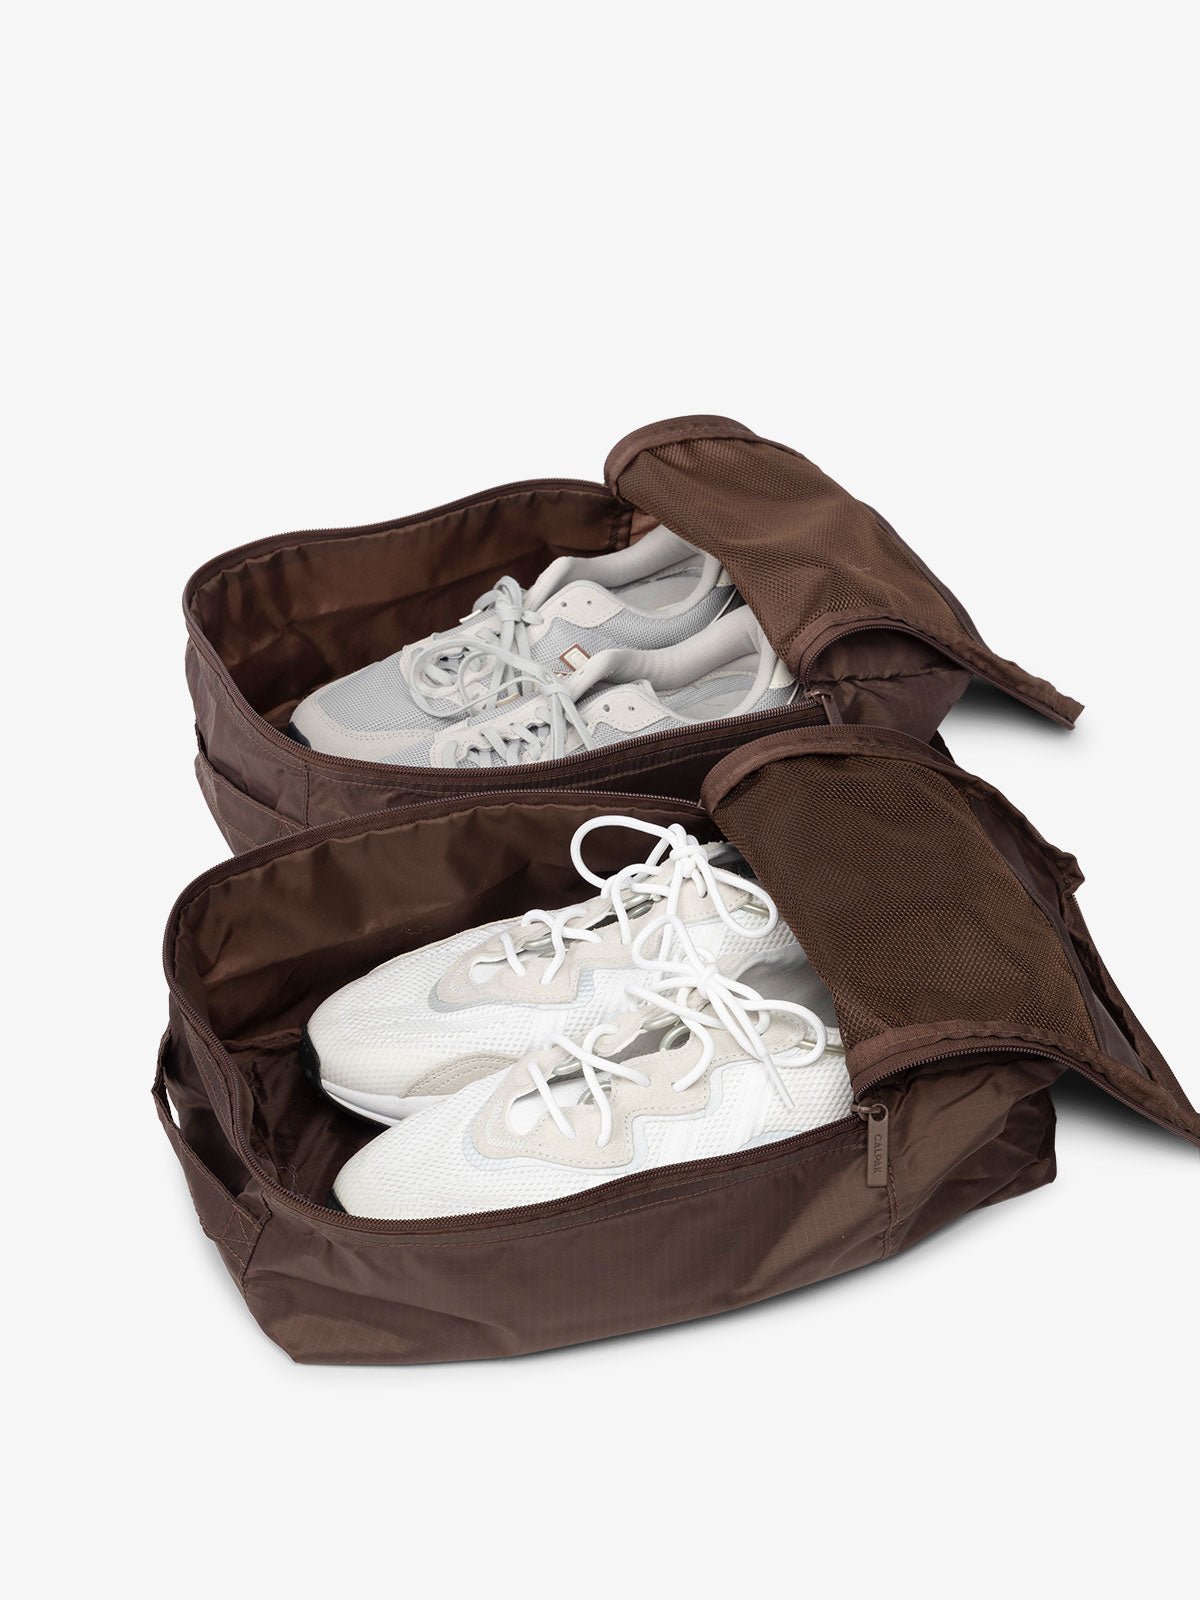 CALPAK Compakt shoe bag set with mesh pockets for travel in brown